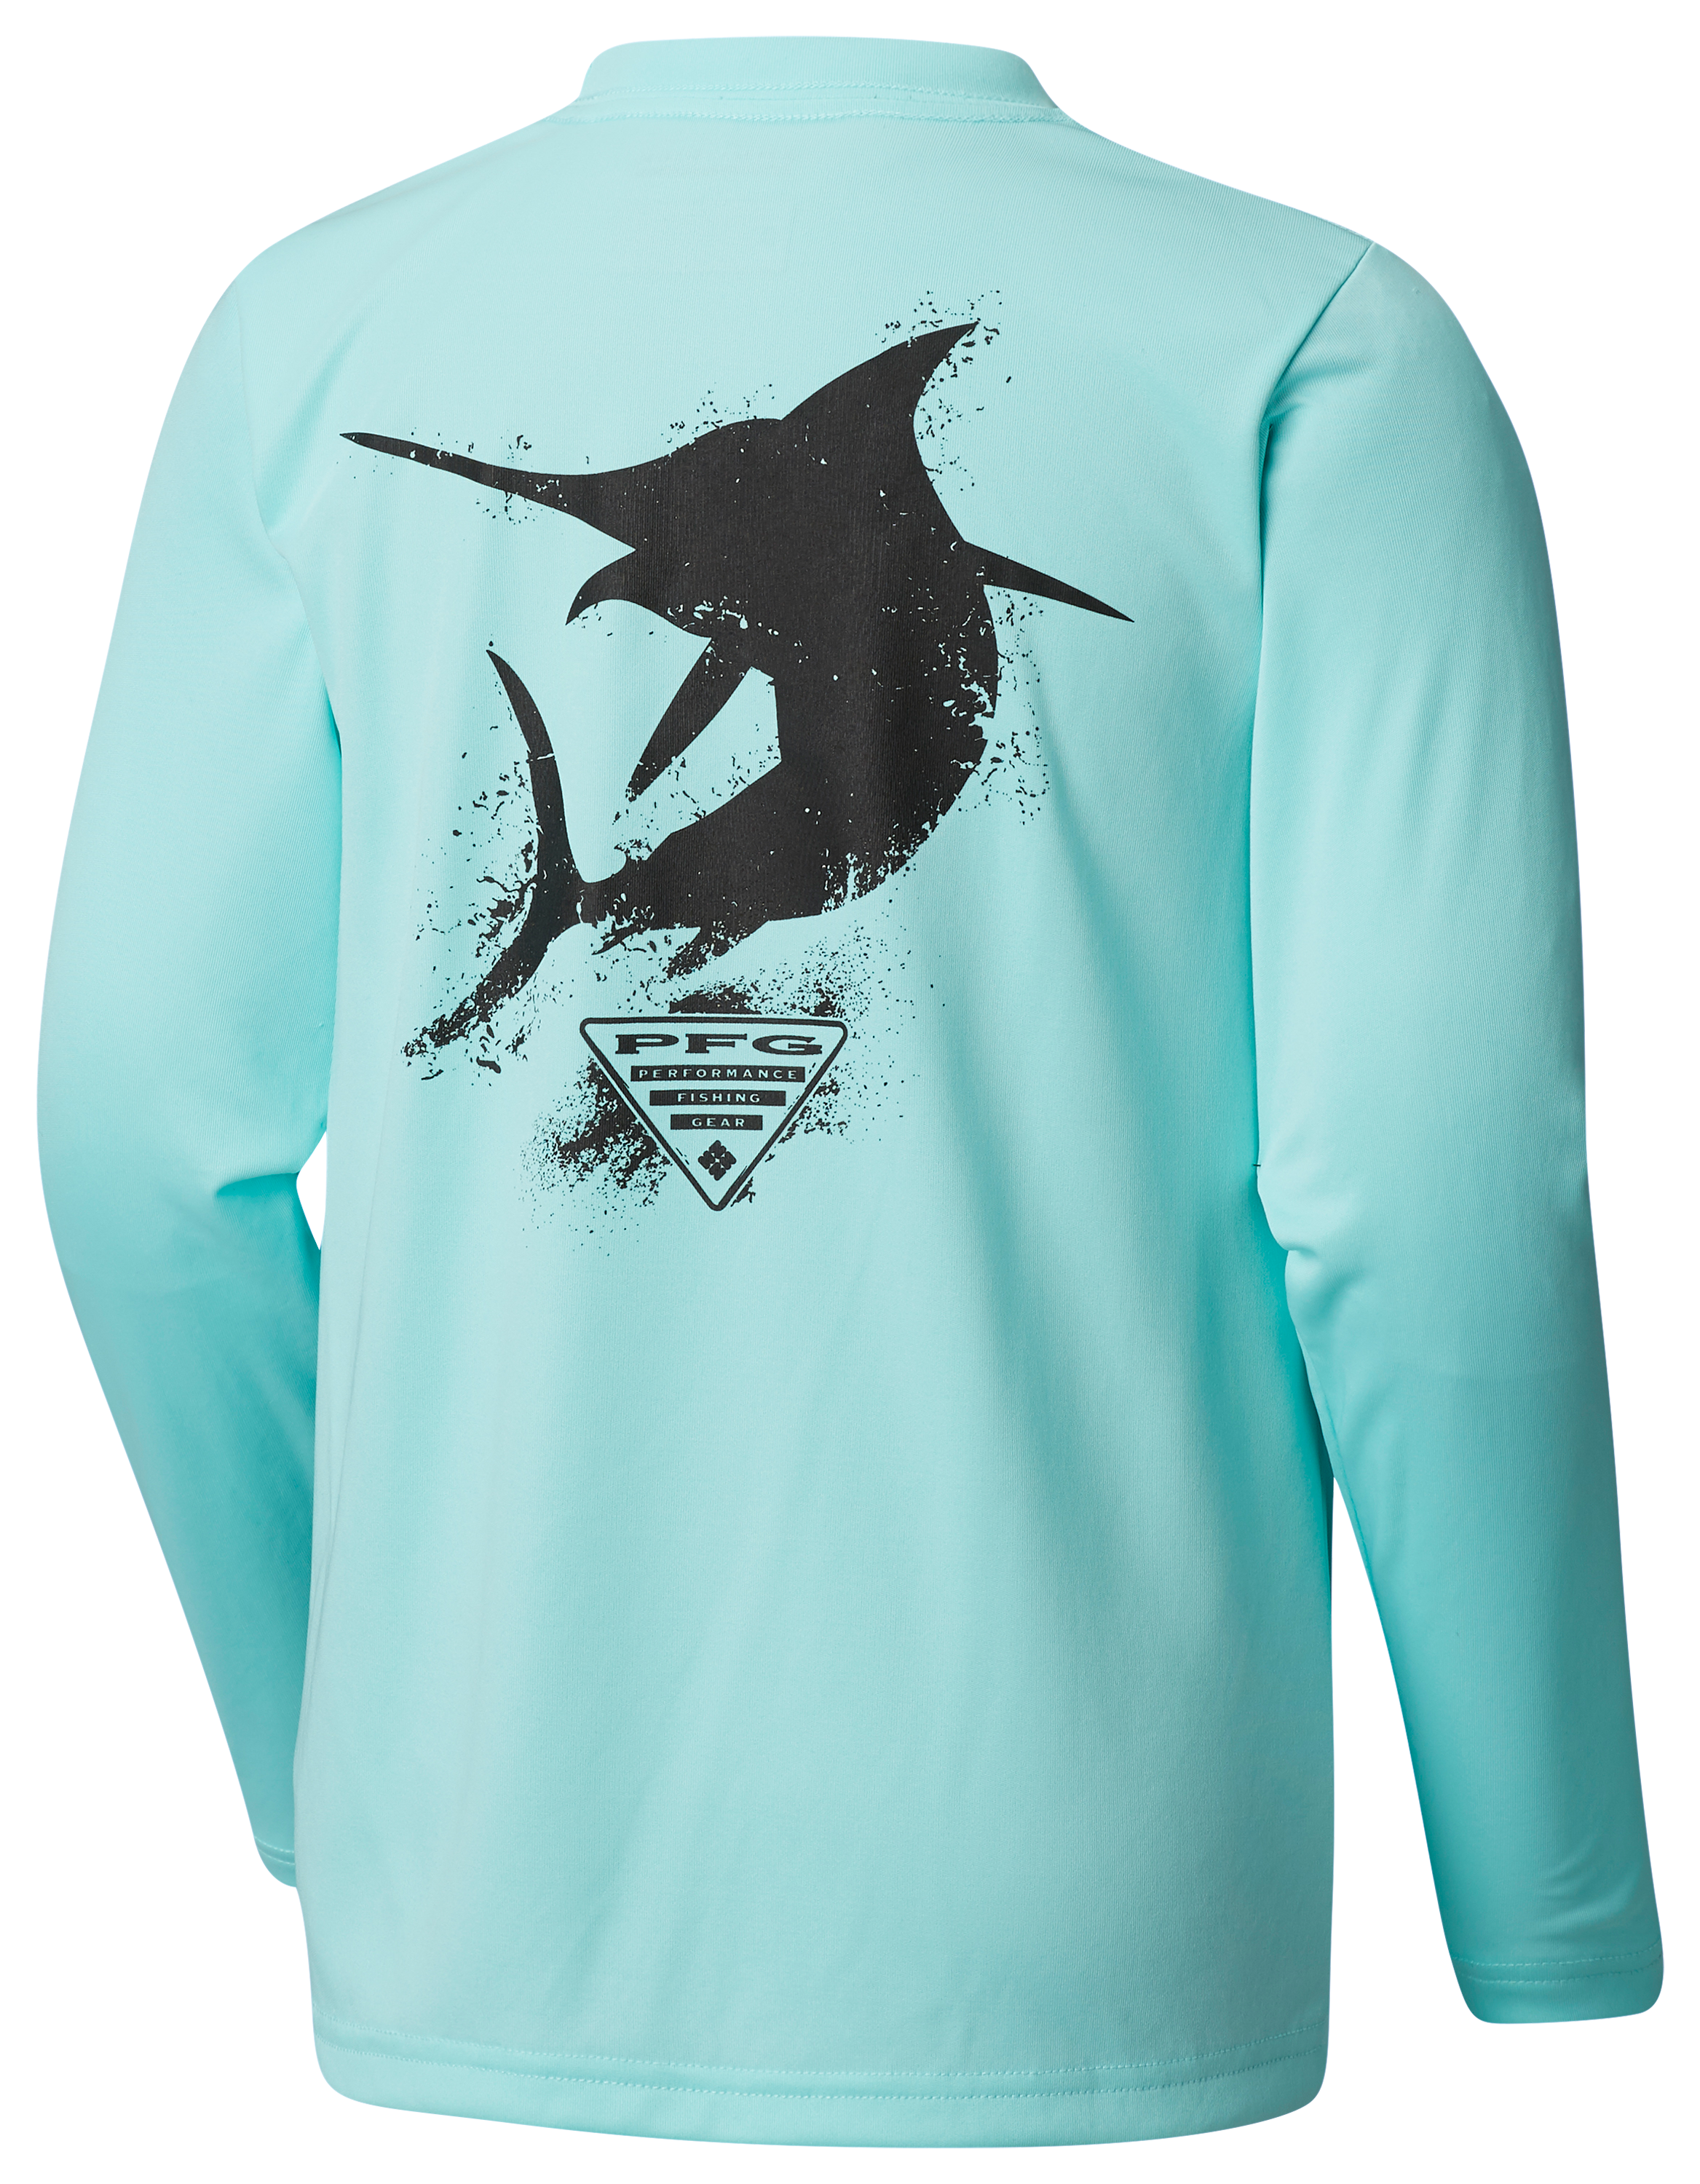 Columbia PFG Silhouette Series Marlin Long-Sleeve Shirt for Kids